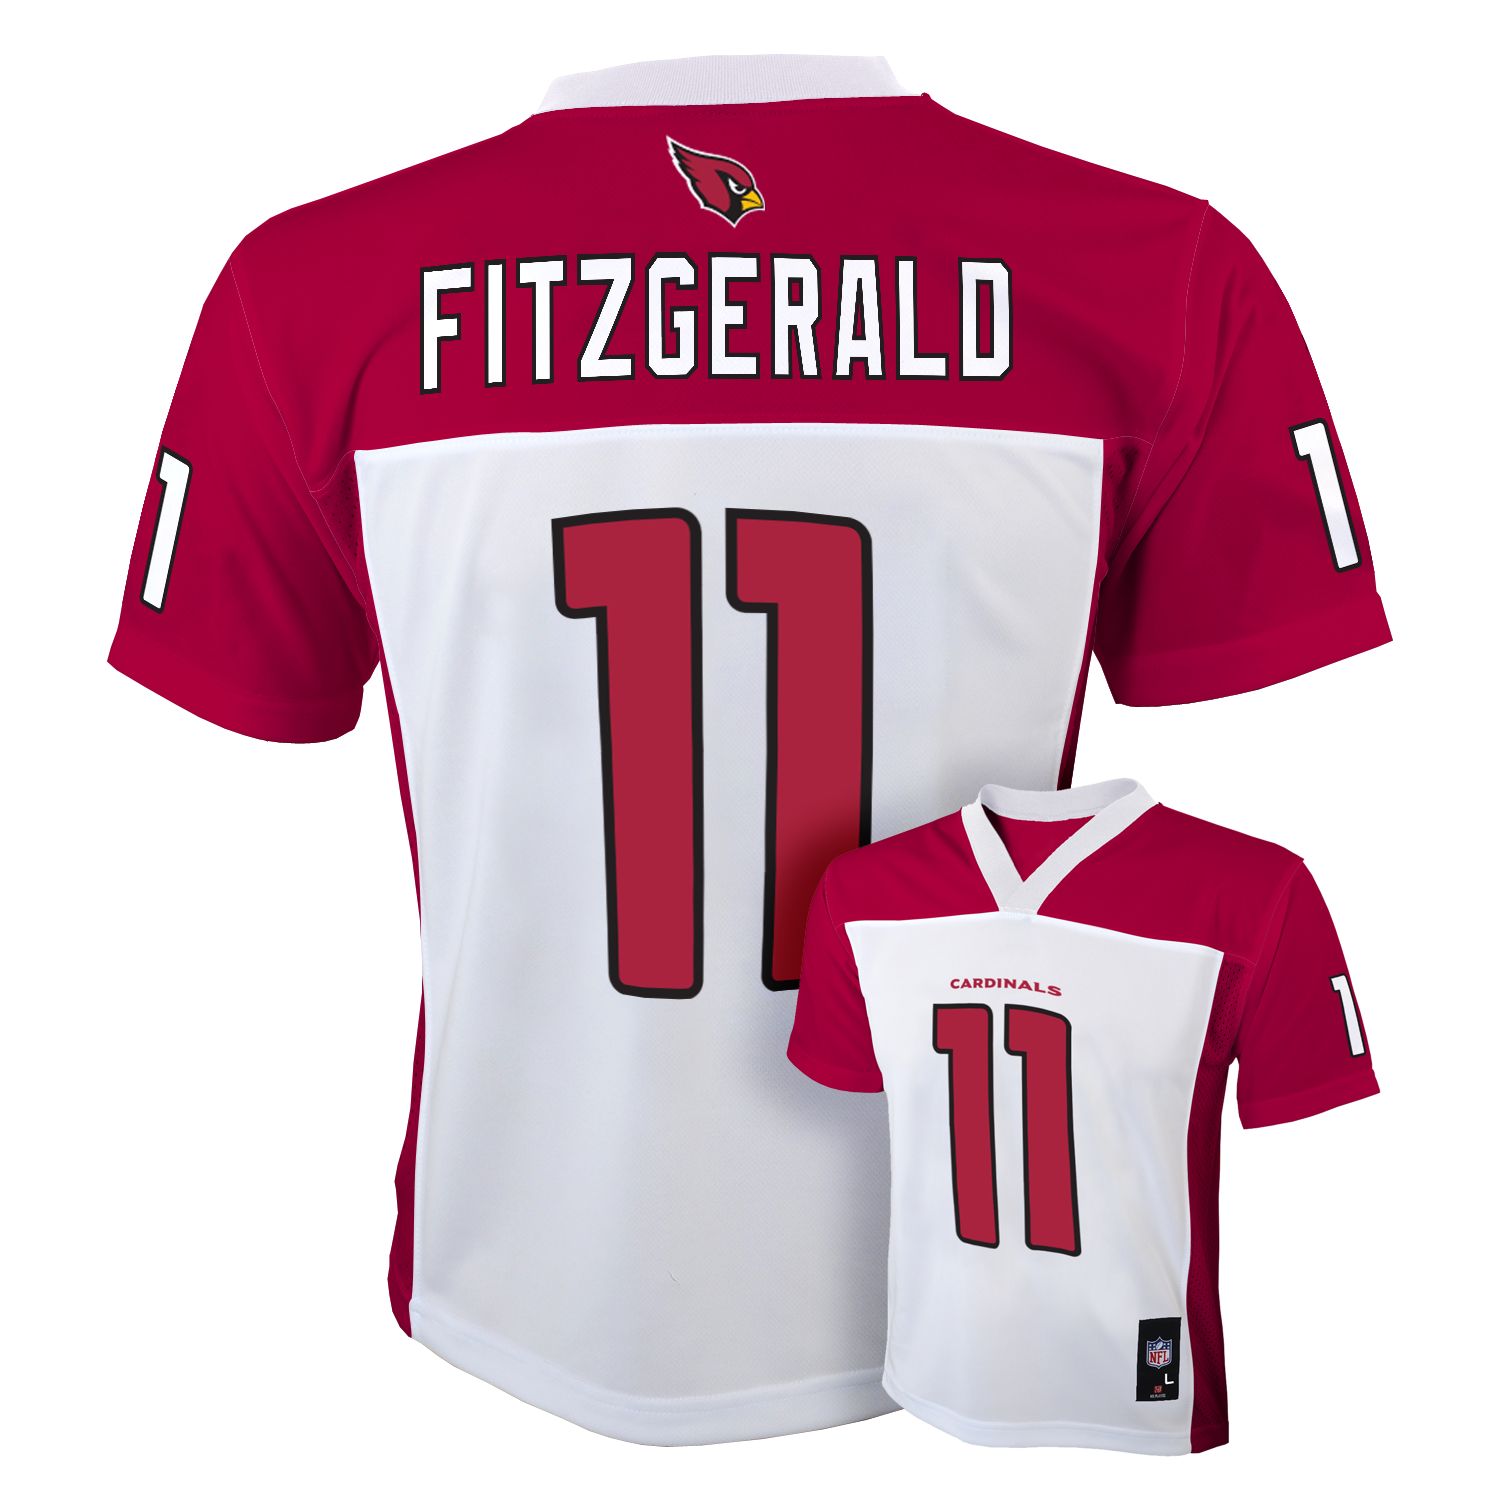 fitzgerald arizona cardinals jersey